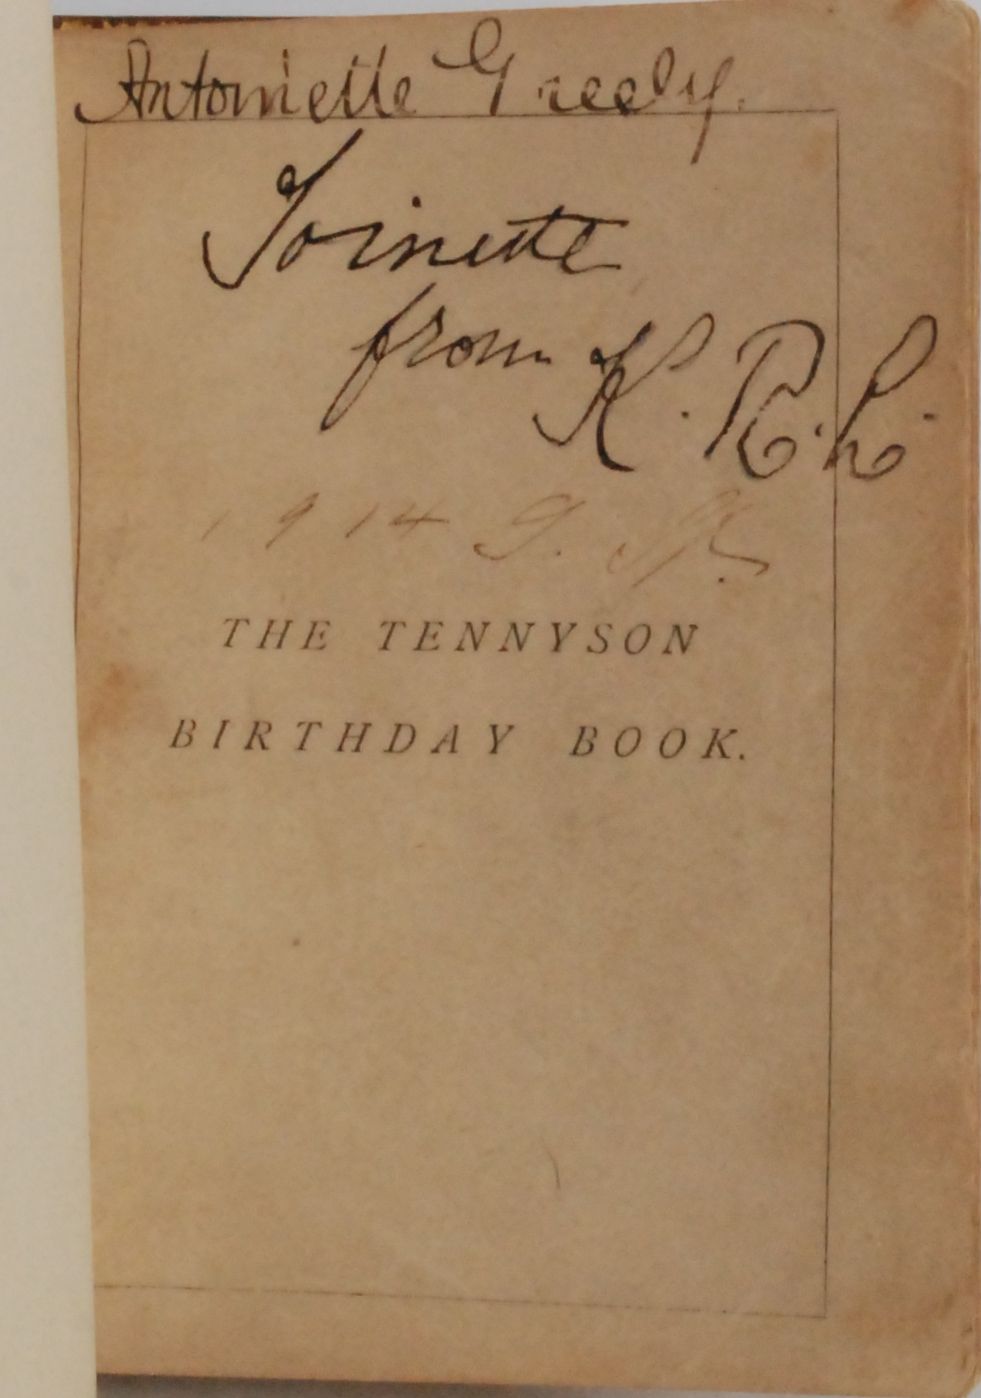 The Tennyson Birthday Book [Book]